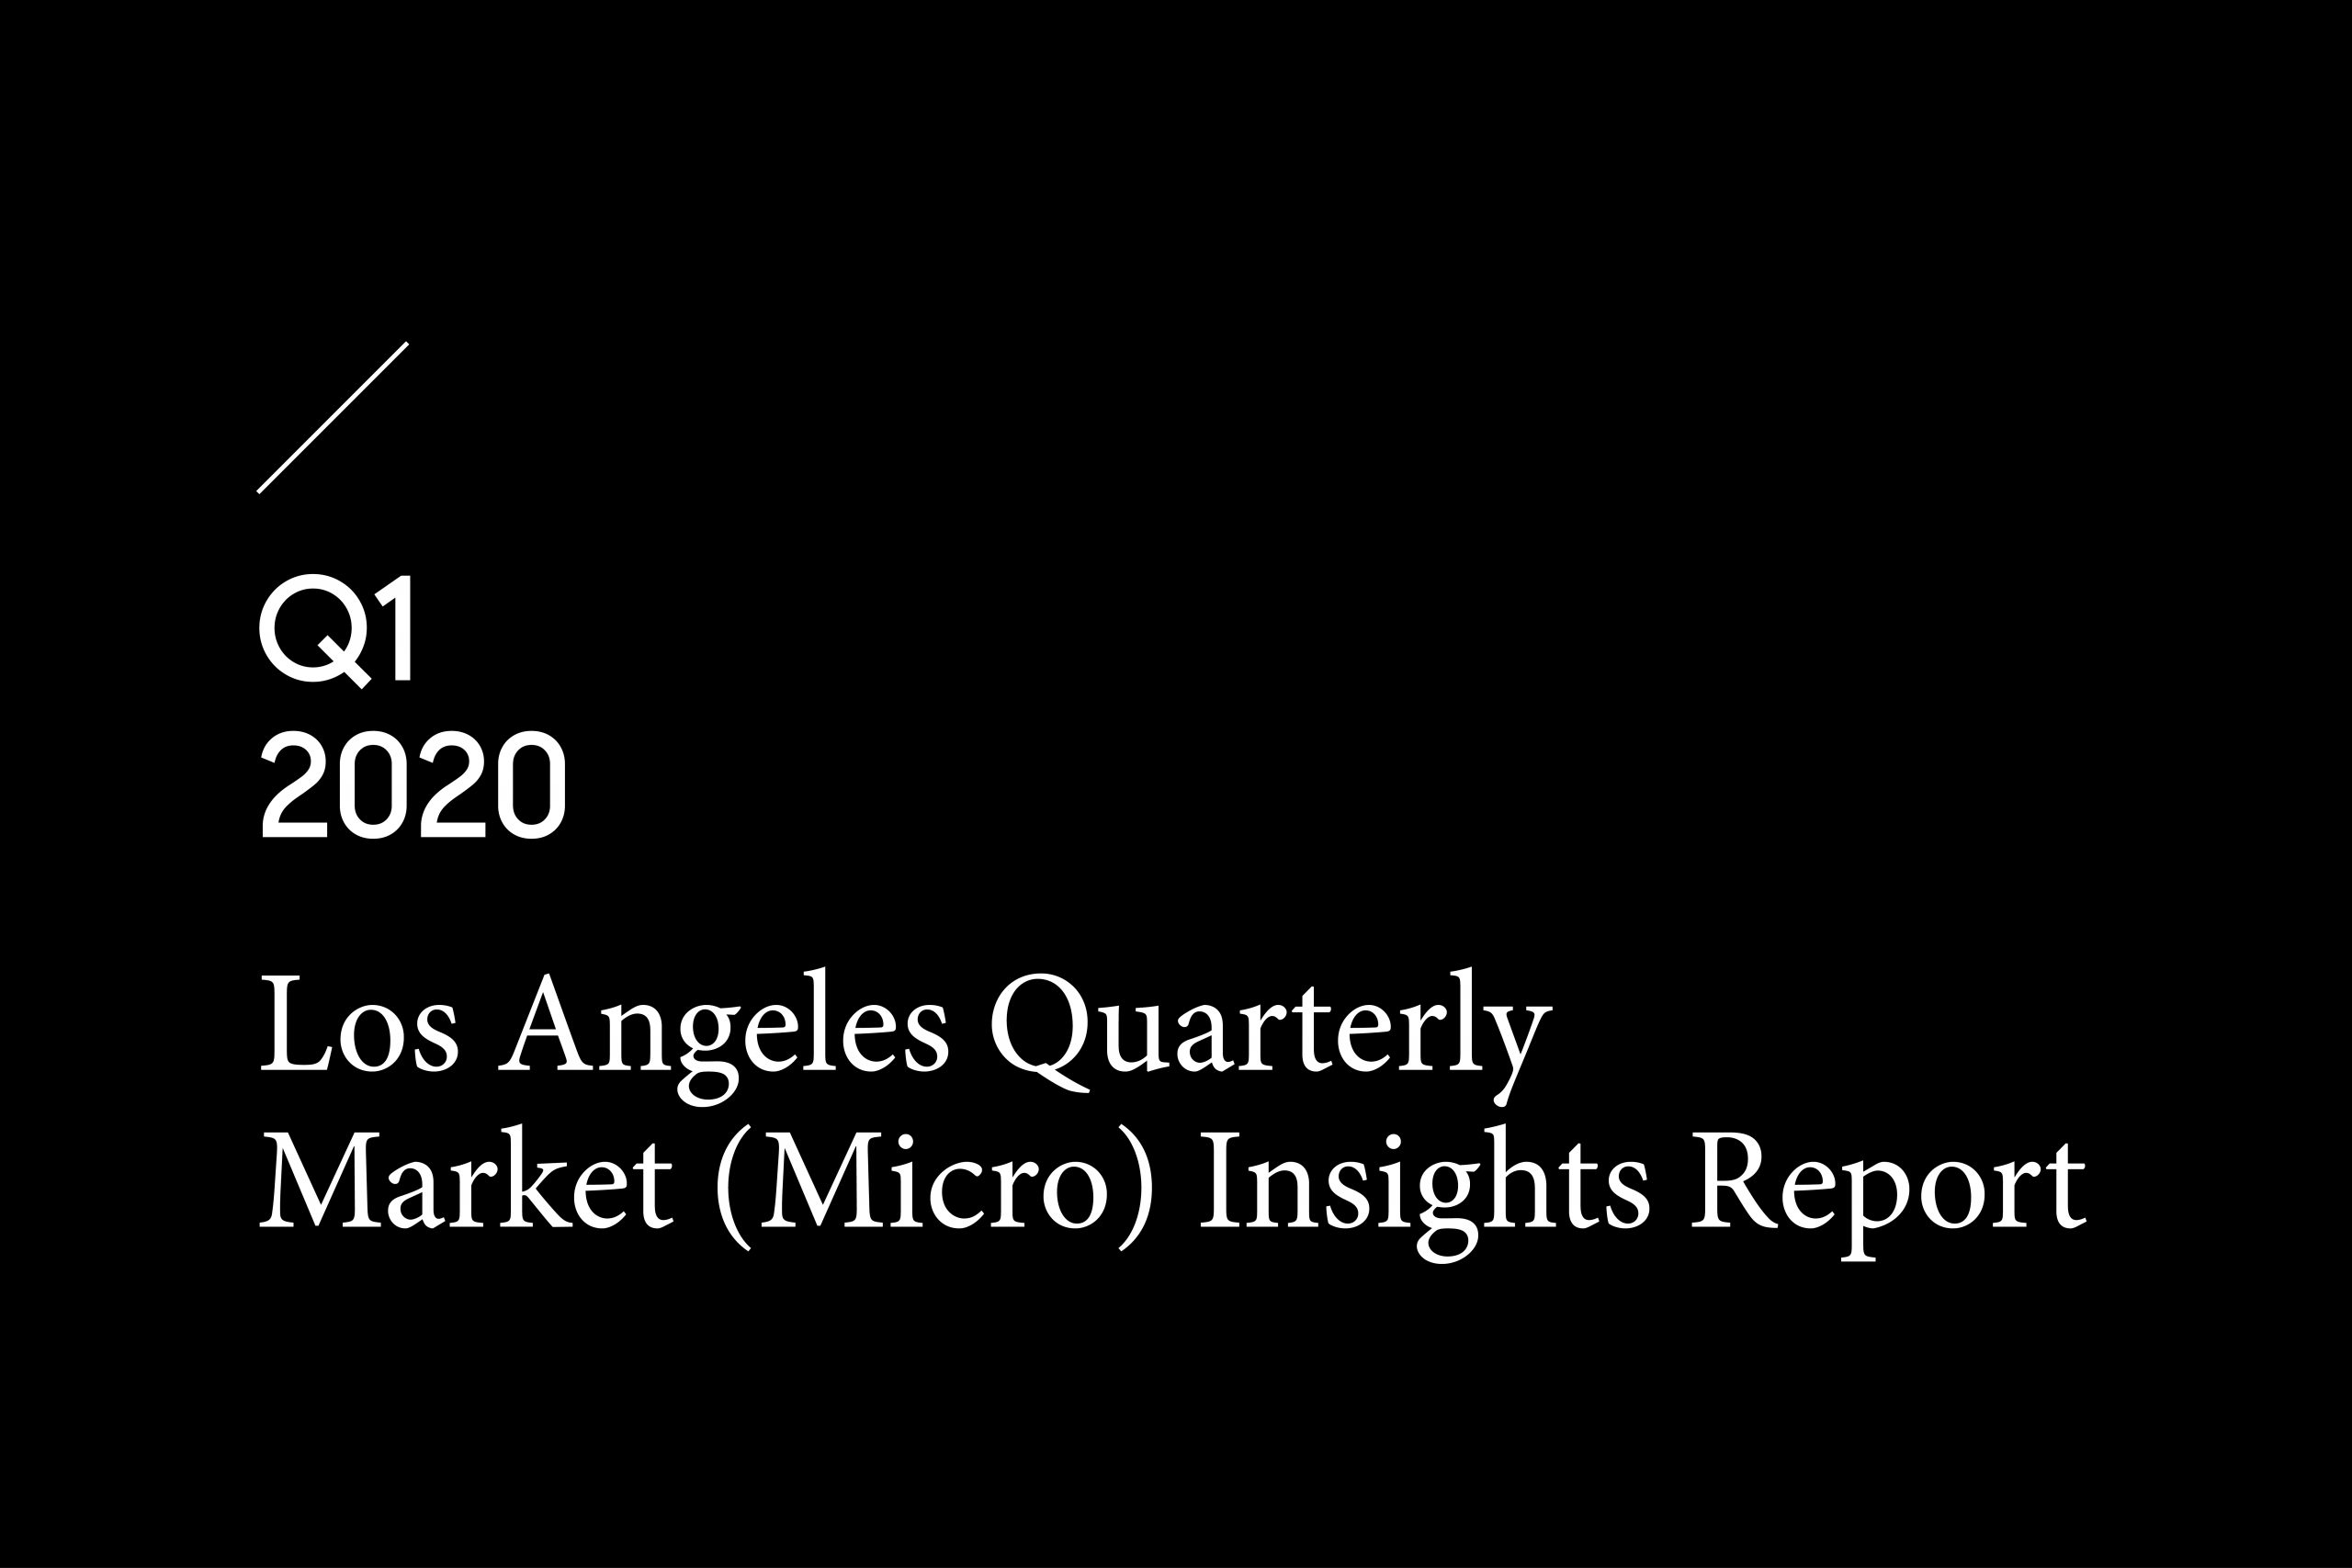 Los Angeles Quarterly Market Insights Report (Micro) Q1 2020